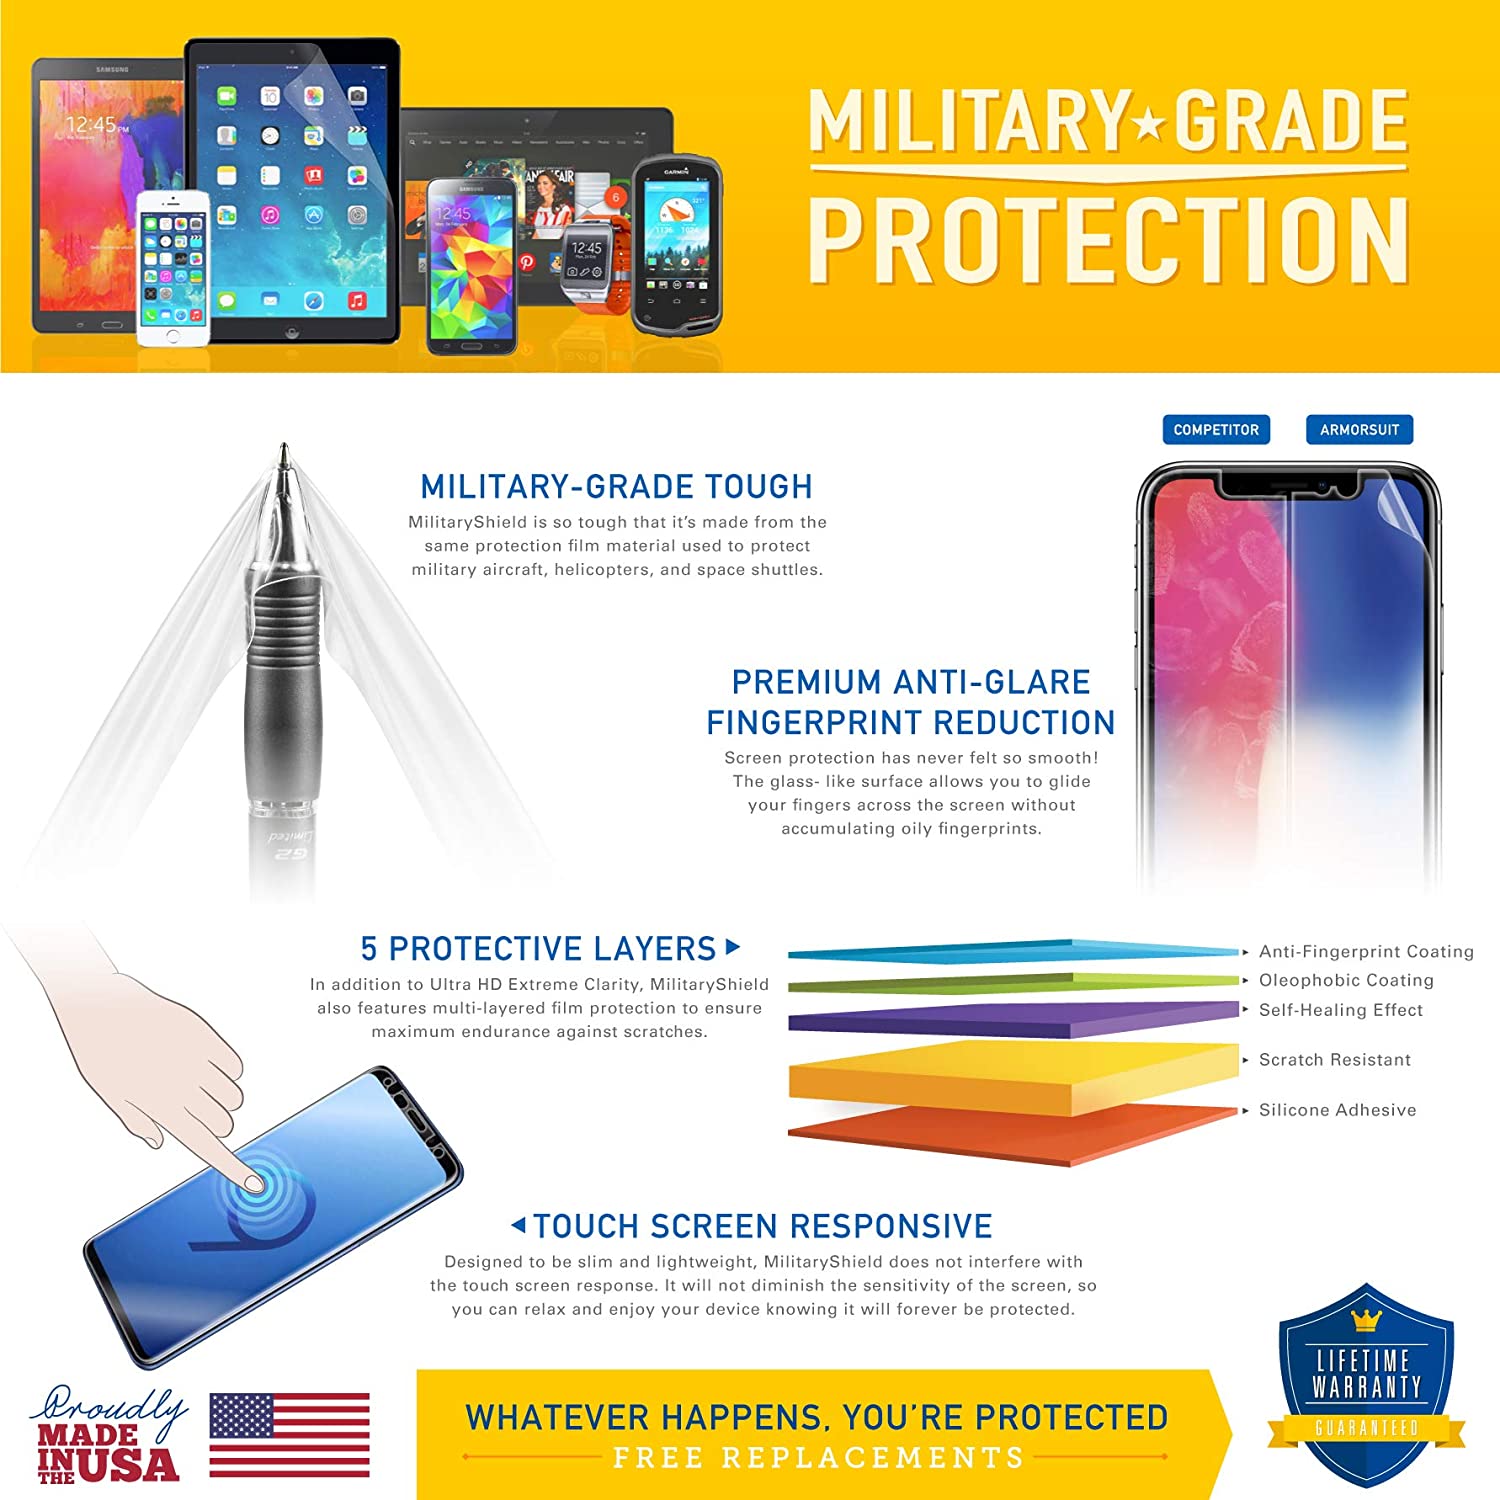 Samsung ATIV Smart PC Pro 700T Full Body Skin Protector